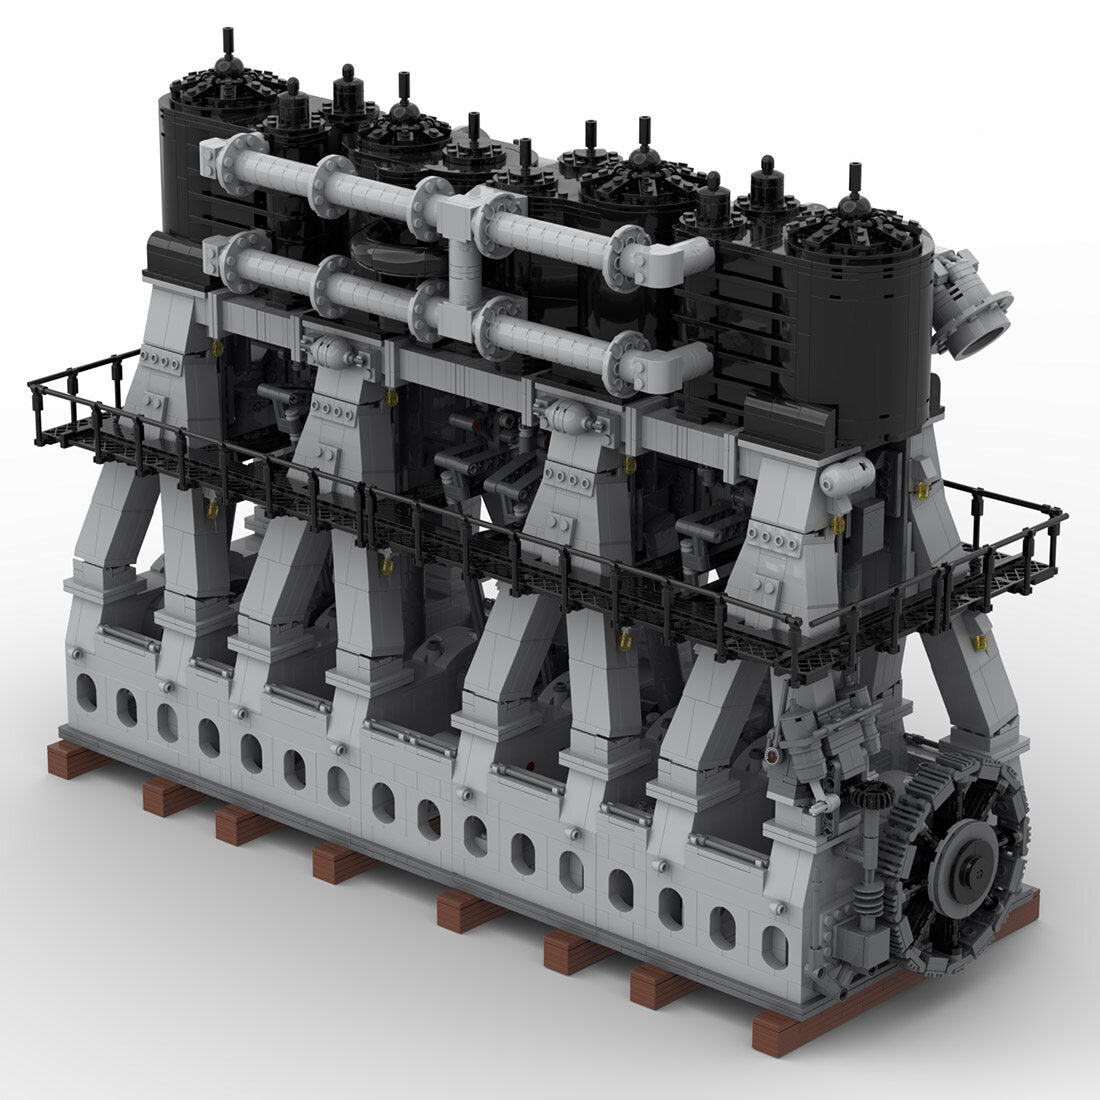 Titanic Reciprocating Triple Expansion Steam Engine Small Particles MOC Building Blocks Set-6584PCS-Build Your Own Titanic Engine enginediyshop